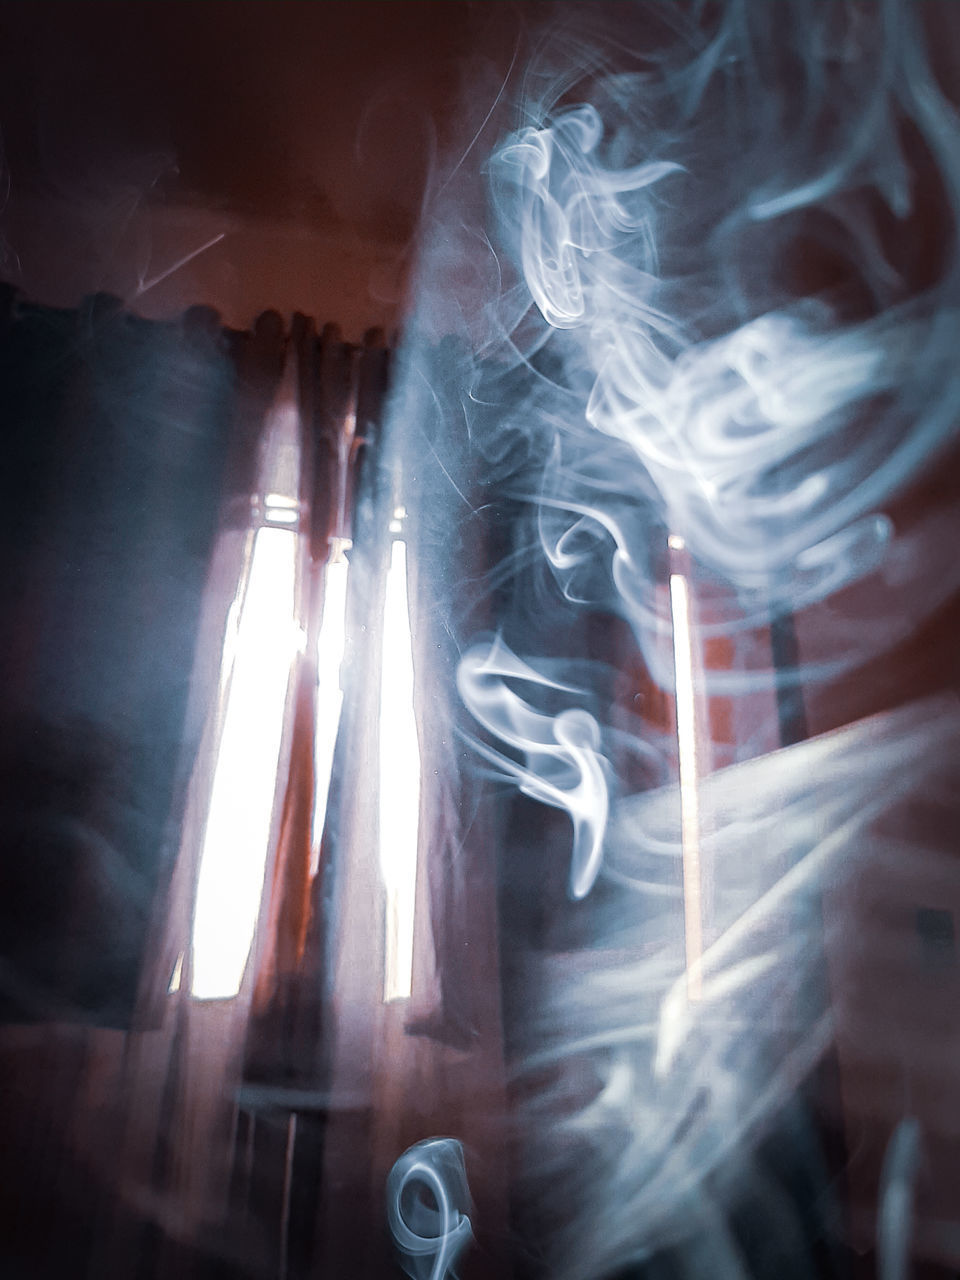 CLOSE-UP OF SMOKE EMITTING FROM LIGHT